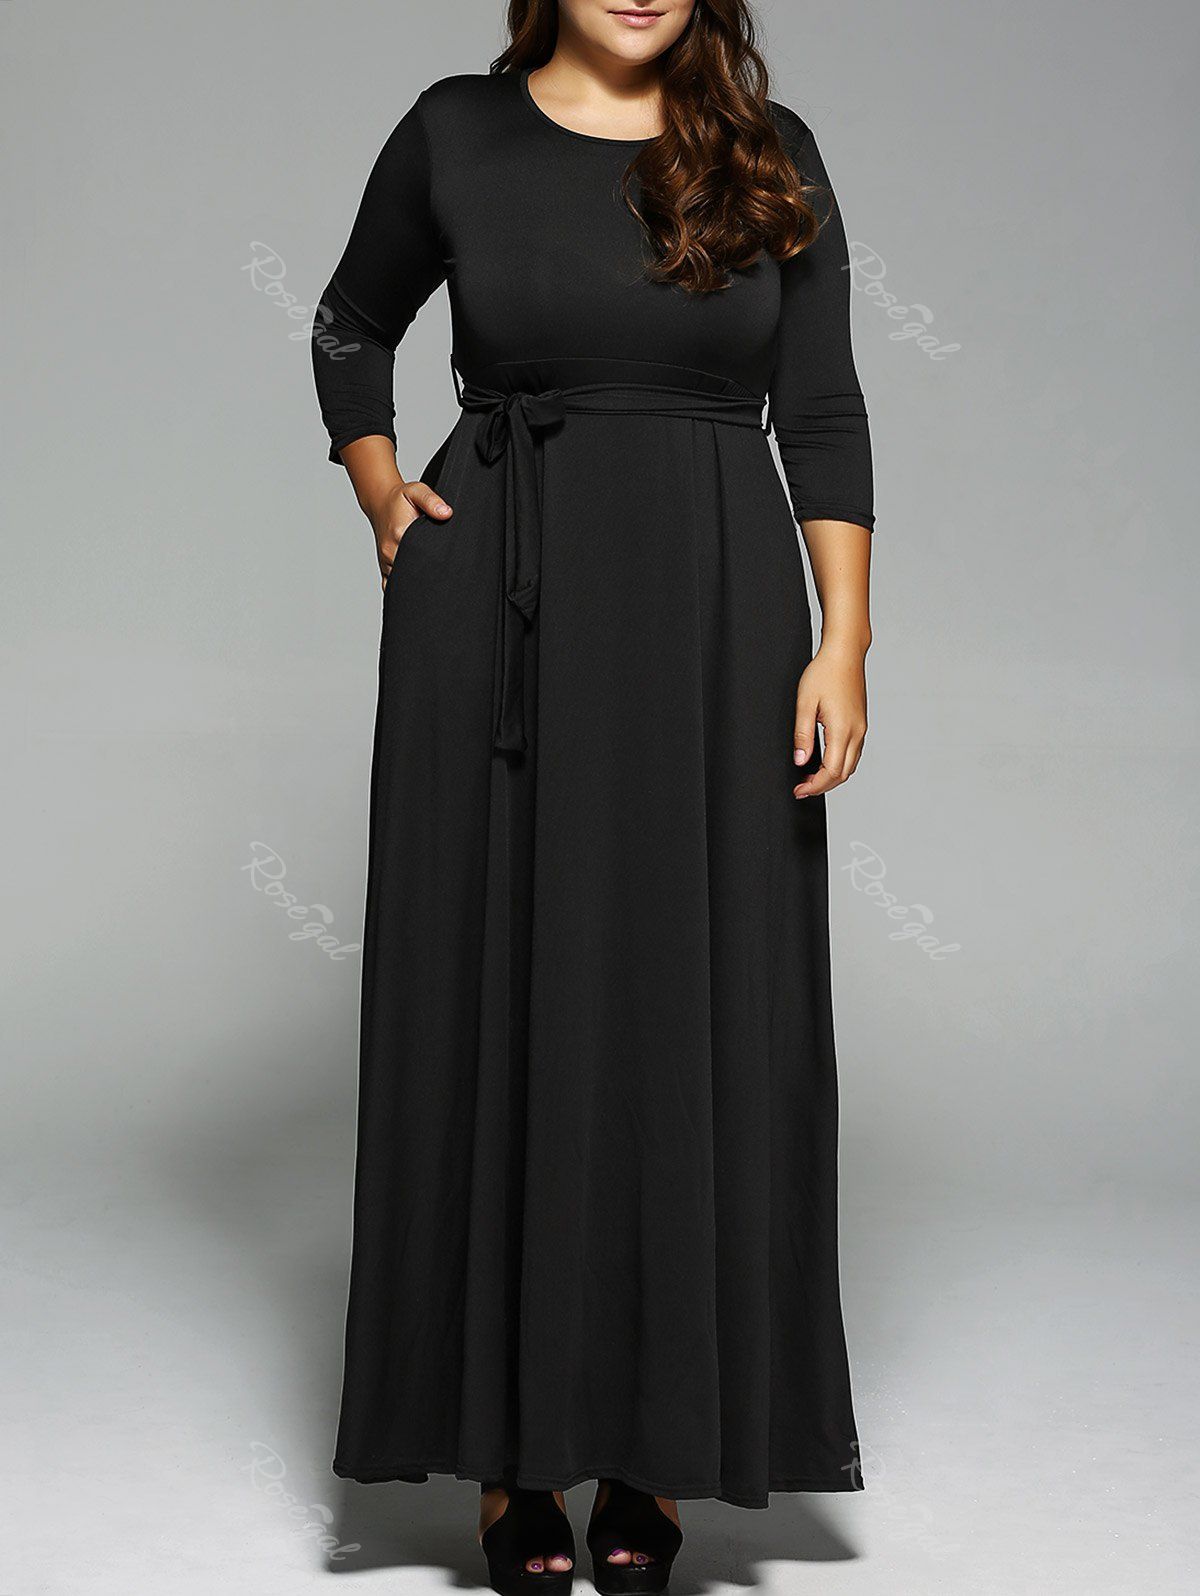 Black Xl Plus Size Long Sleeve Maxi Formal A Line Evening Swing Dress ...